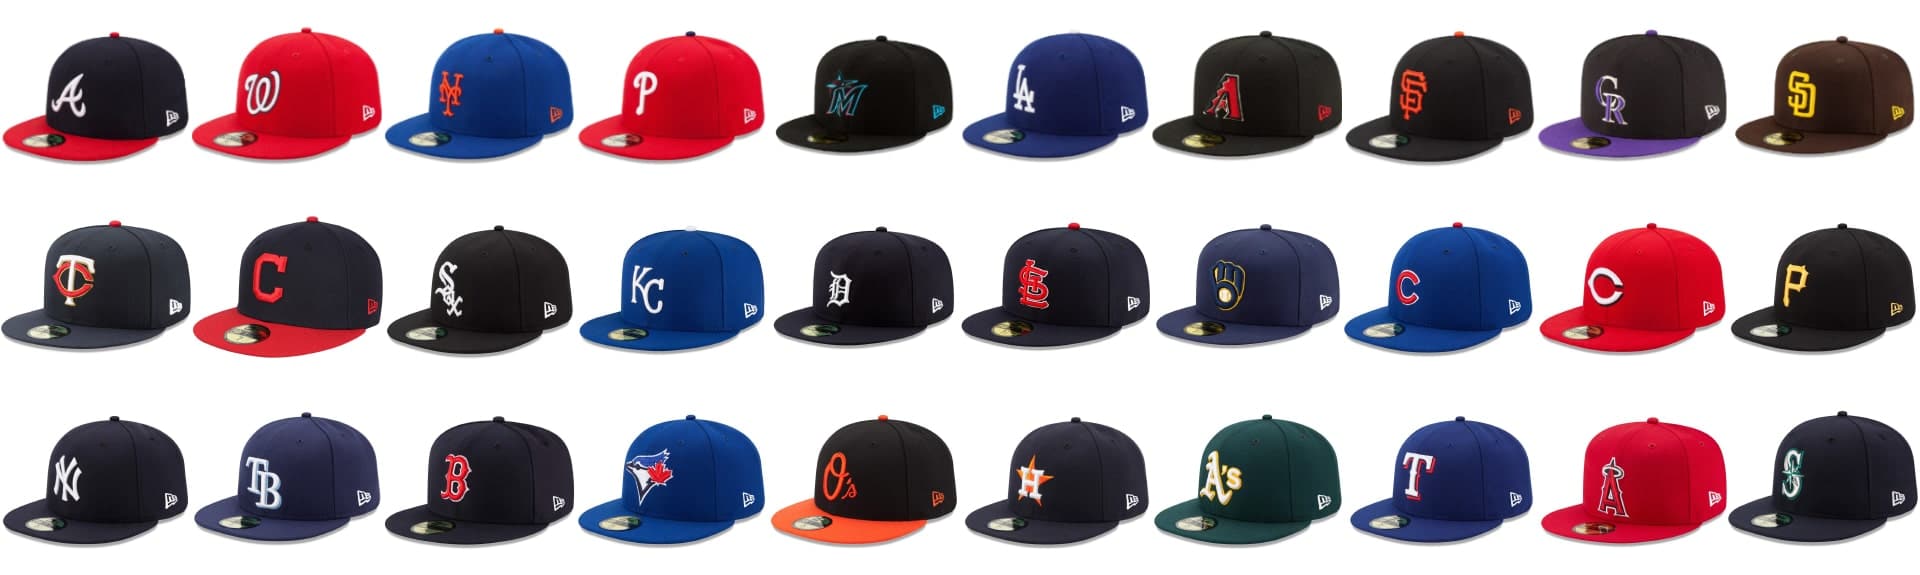 MLB Fitted Hats 3 x 1001-min